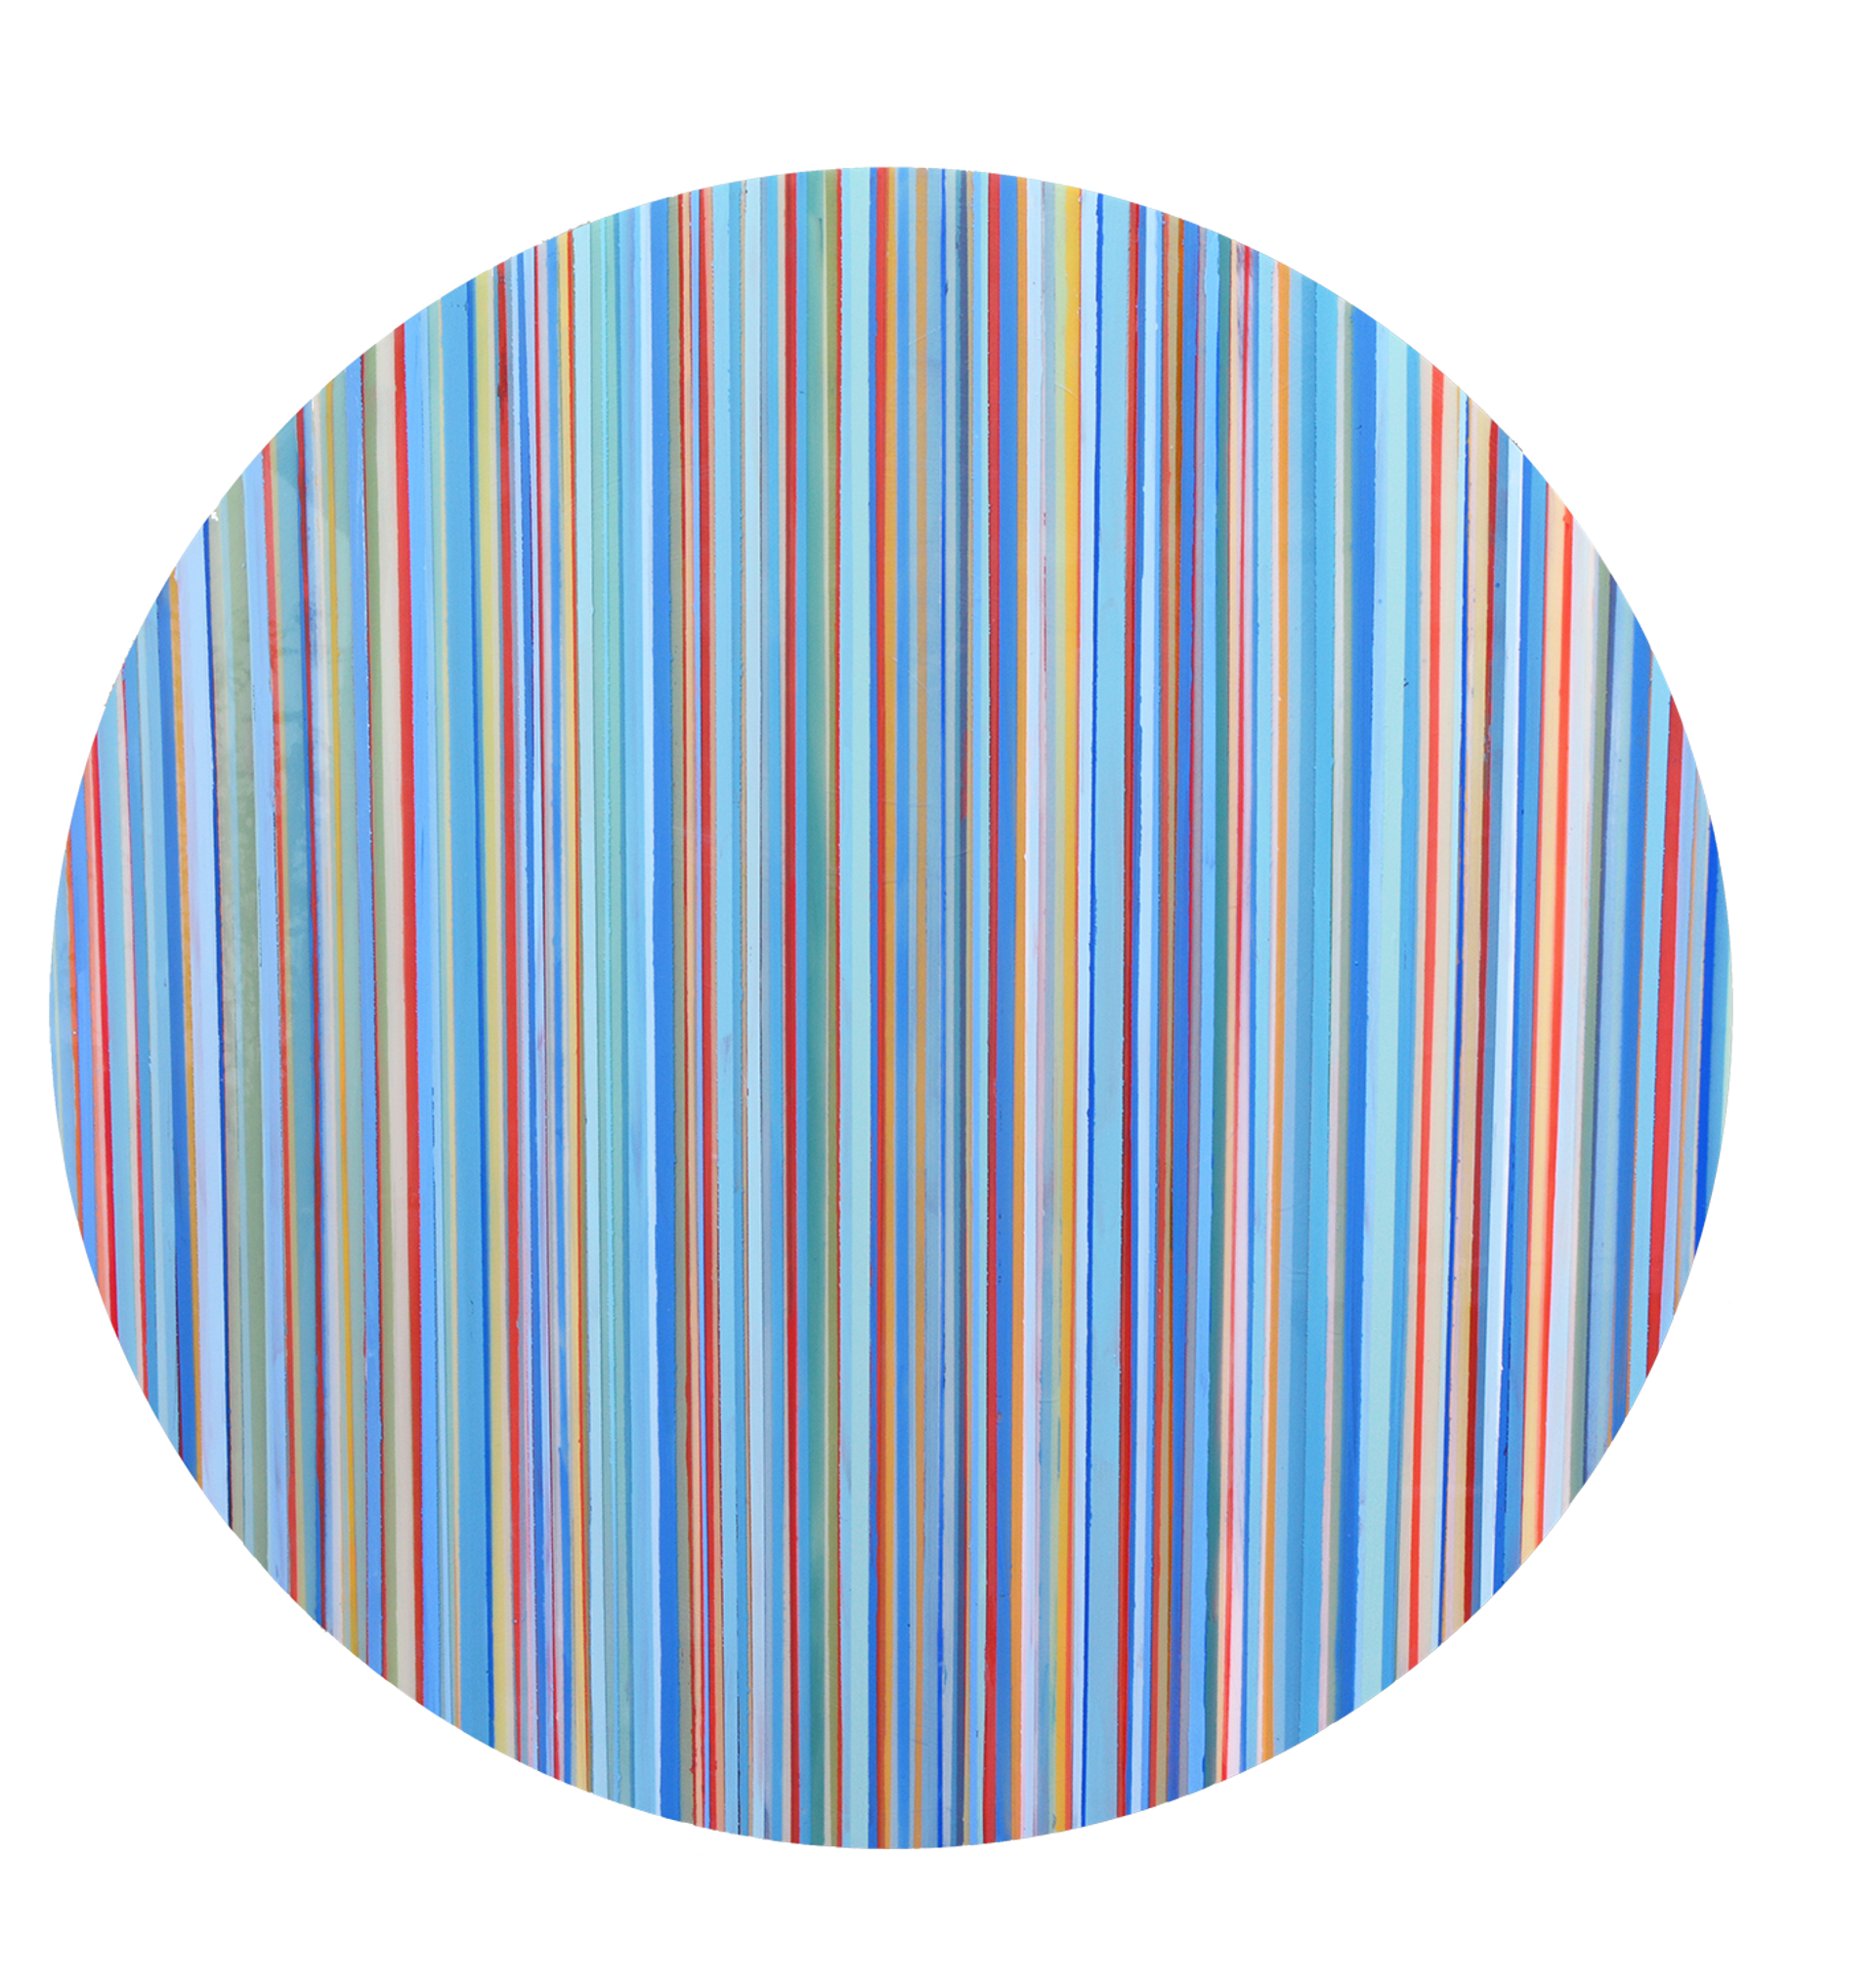 EQ in Colors 100, 1-1700 by Andrzej Karwacki